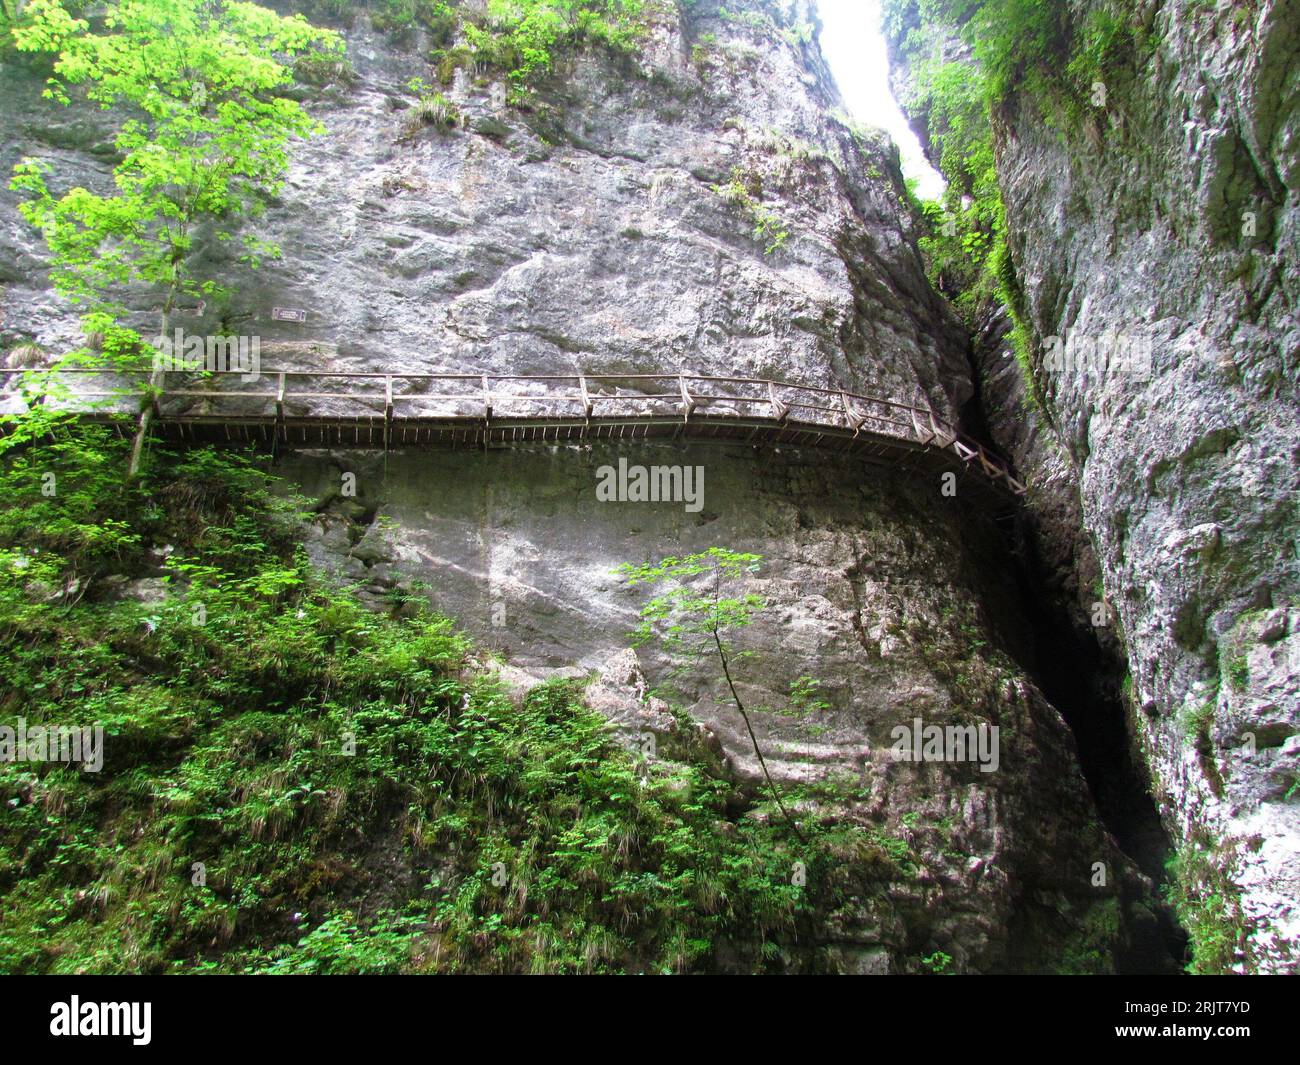 Wooden walkway leading into a narrow cave passage, next to a vertical rock wall at Pokljuka gorge in Gorenjska, Slovenia Stock Photo